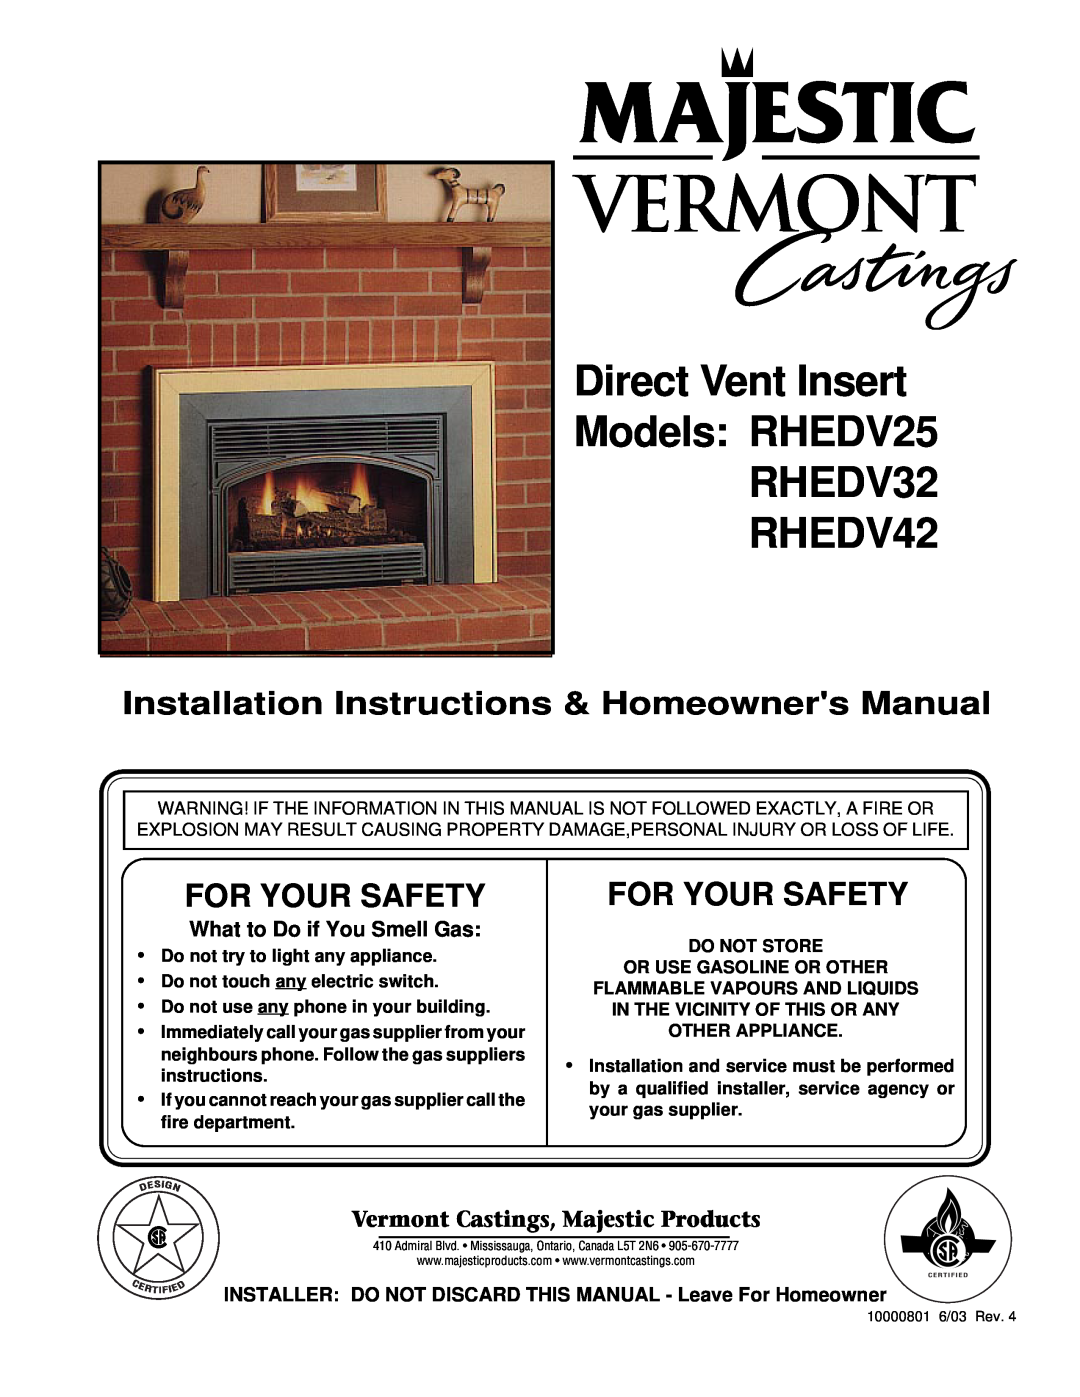 Vermont Casting installation instructions Direct Vent Insert Models RHEDV25 RHEDV32, RHEDV42, For Your Safety 